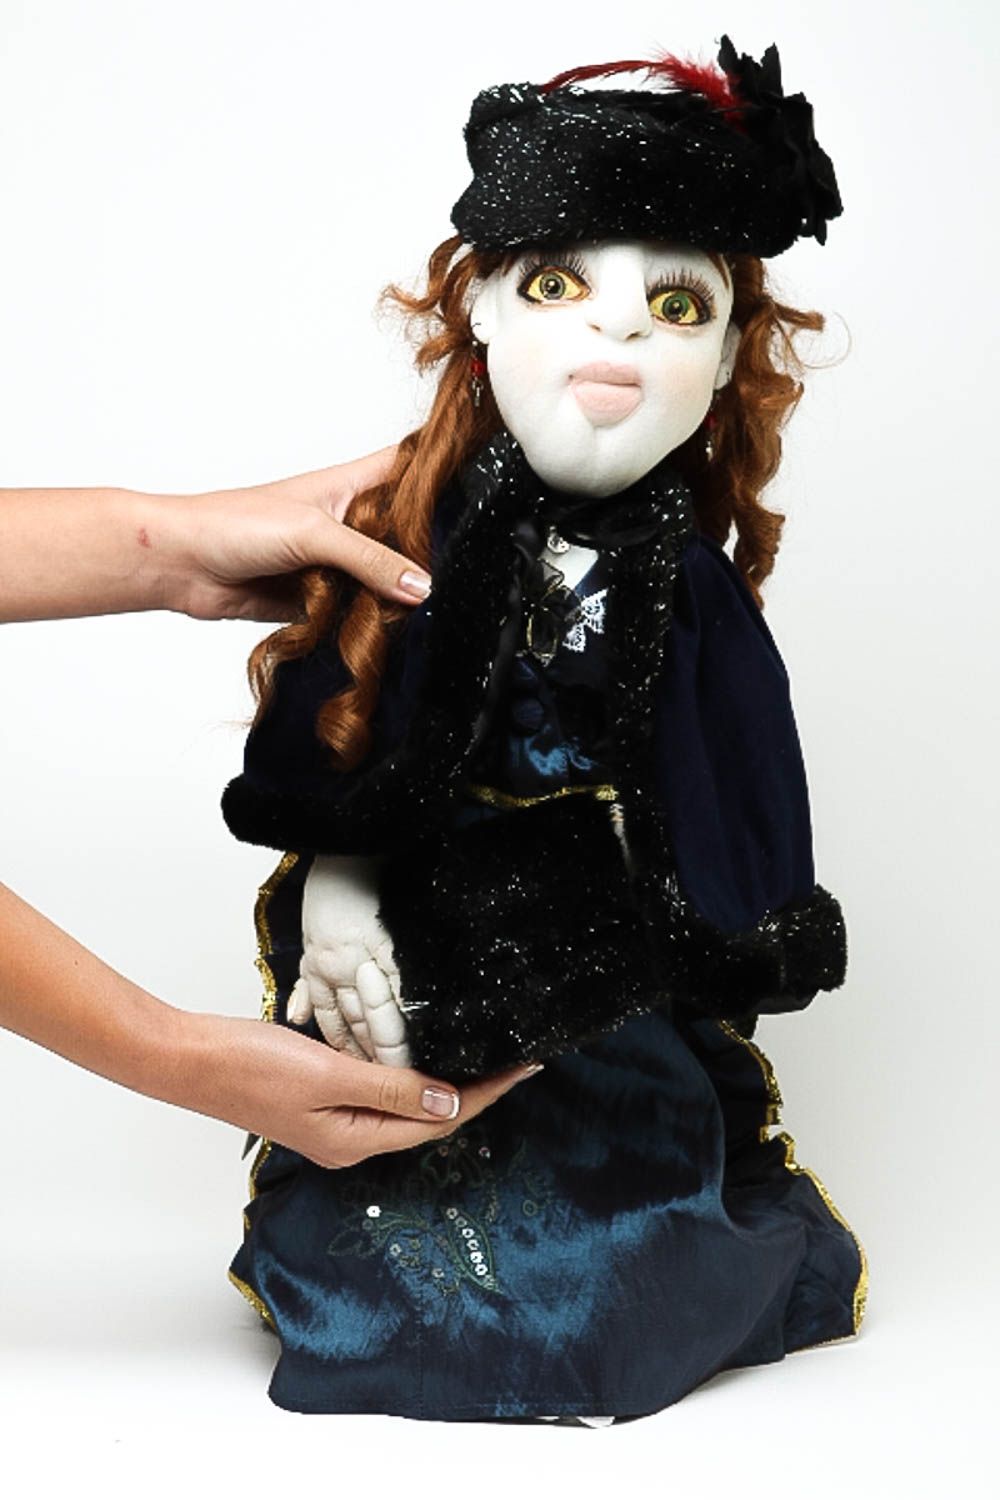 Handmade doll designer doll unusual doll for baby nursery decor gift ideas photo 5